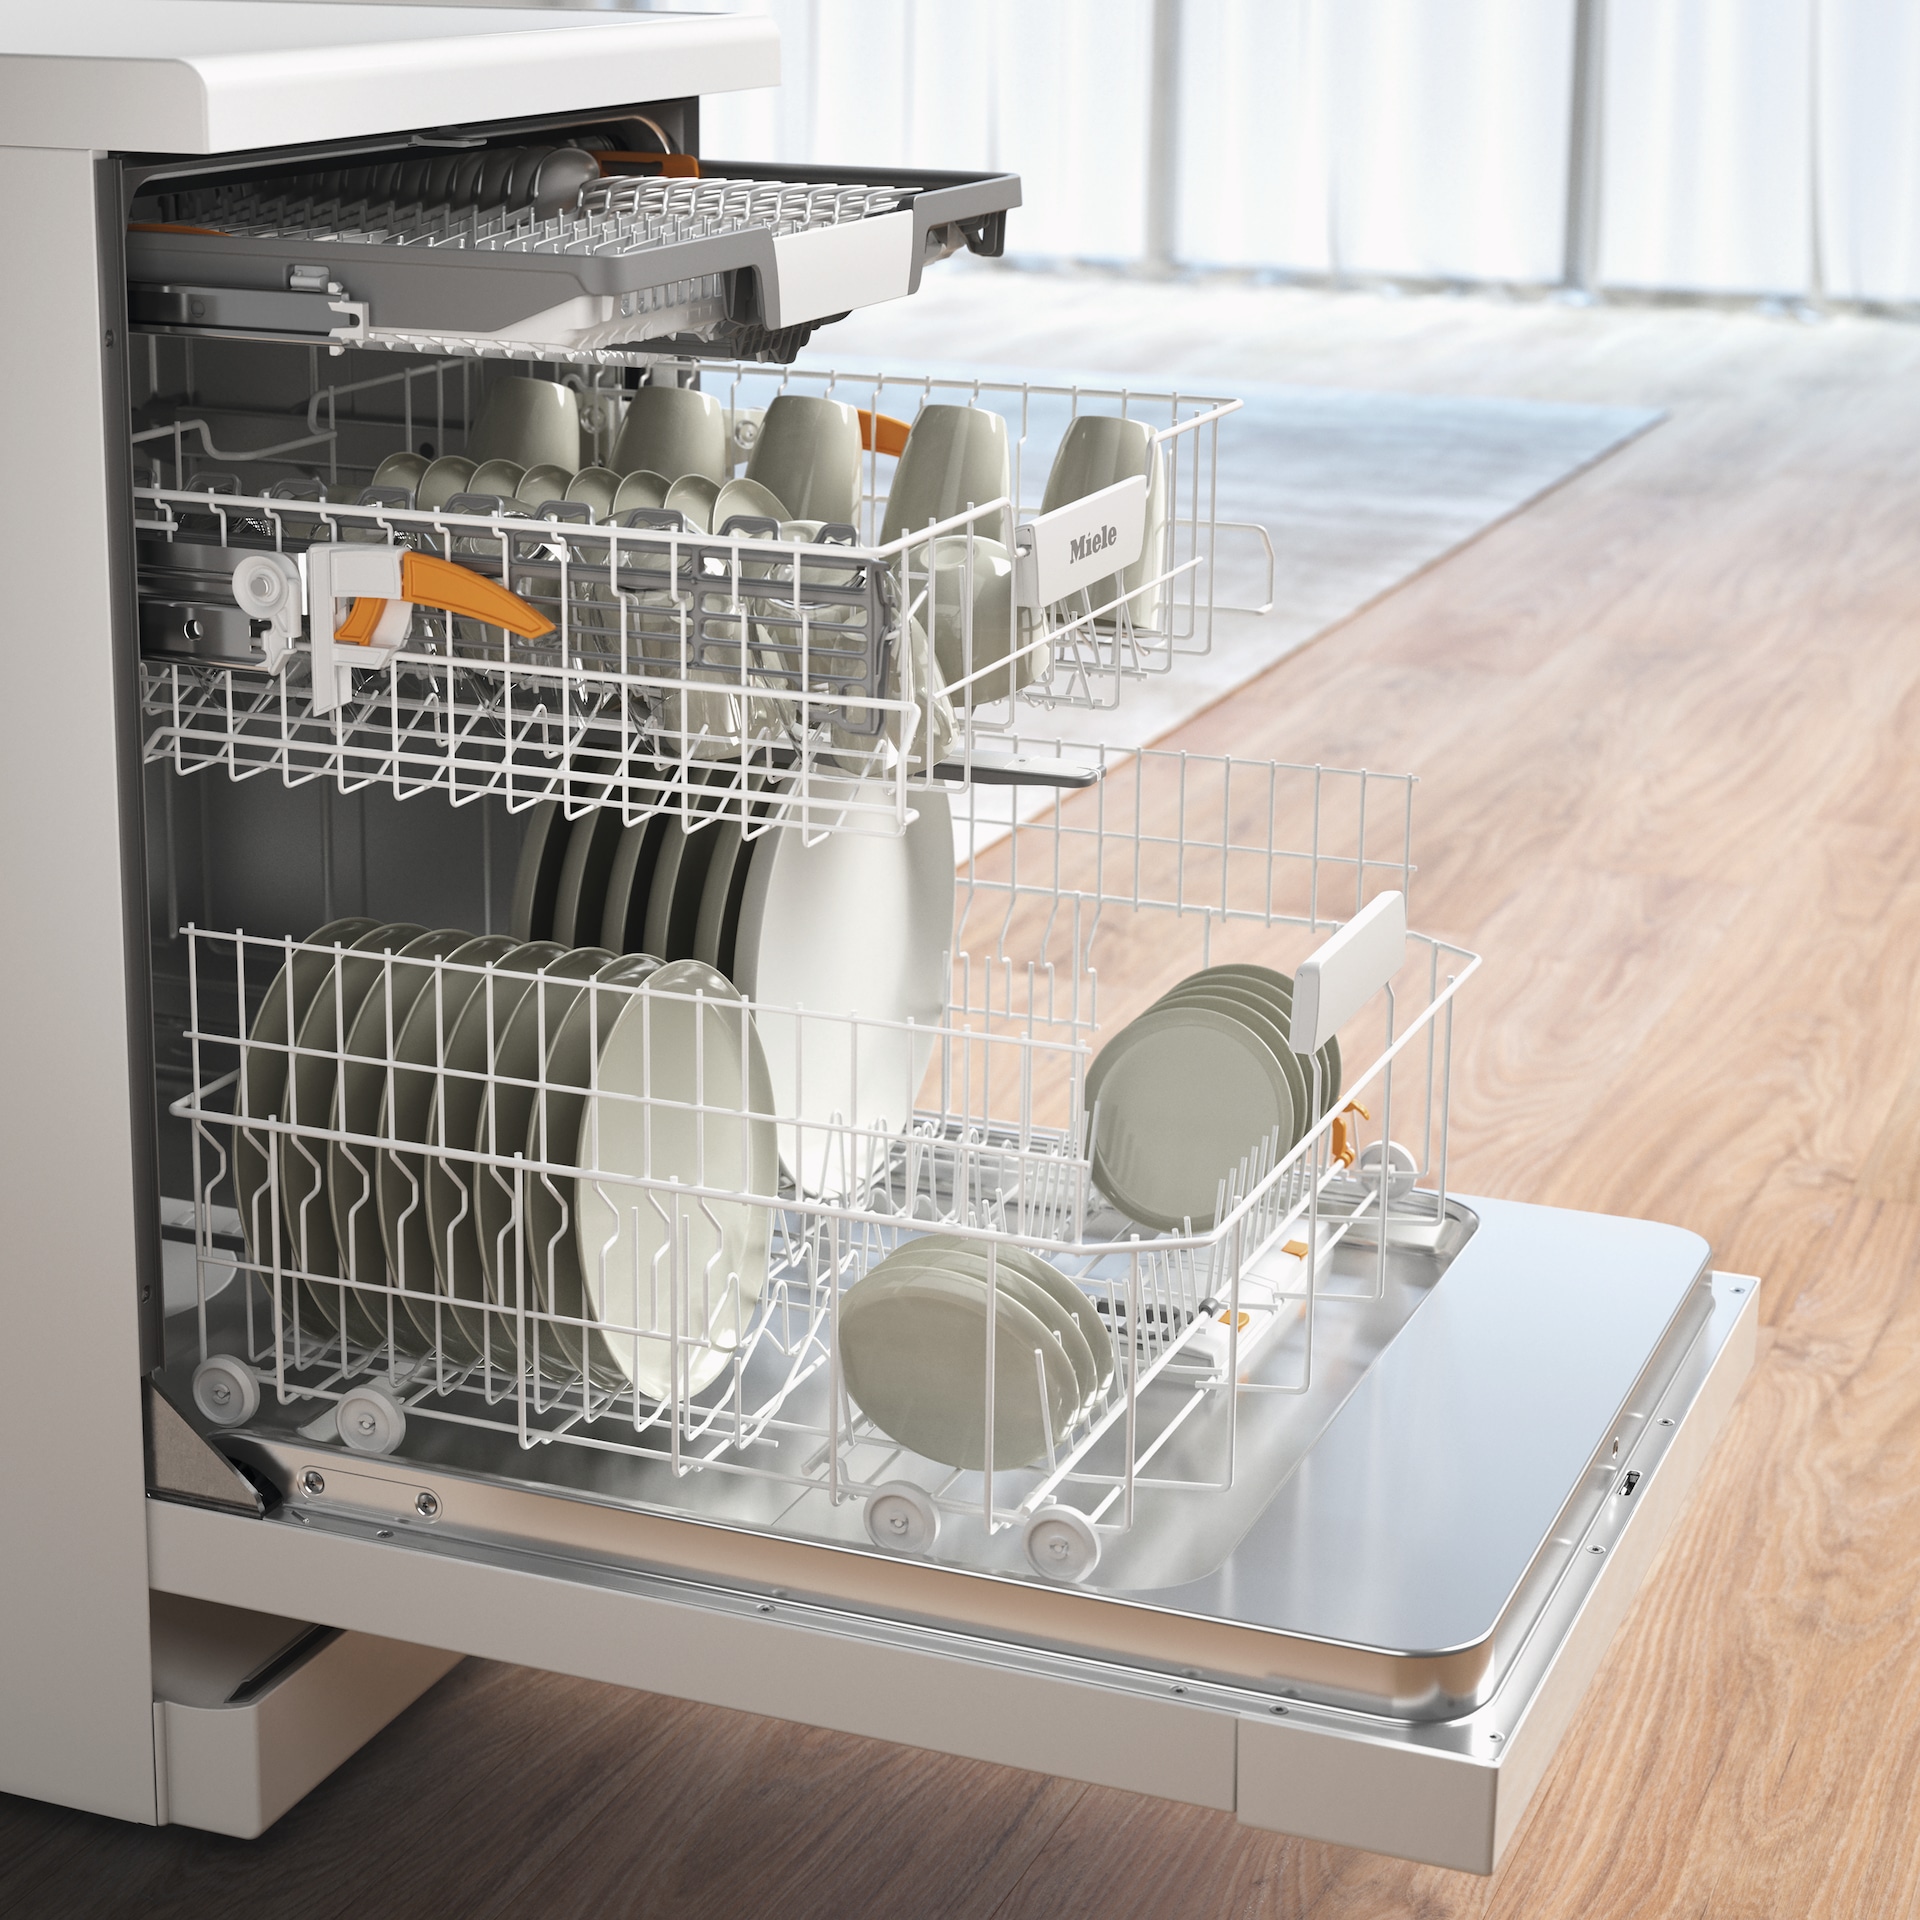 Dishwashers - G 5410 SC Active Plus Brilliant White - 3